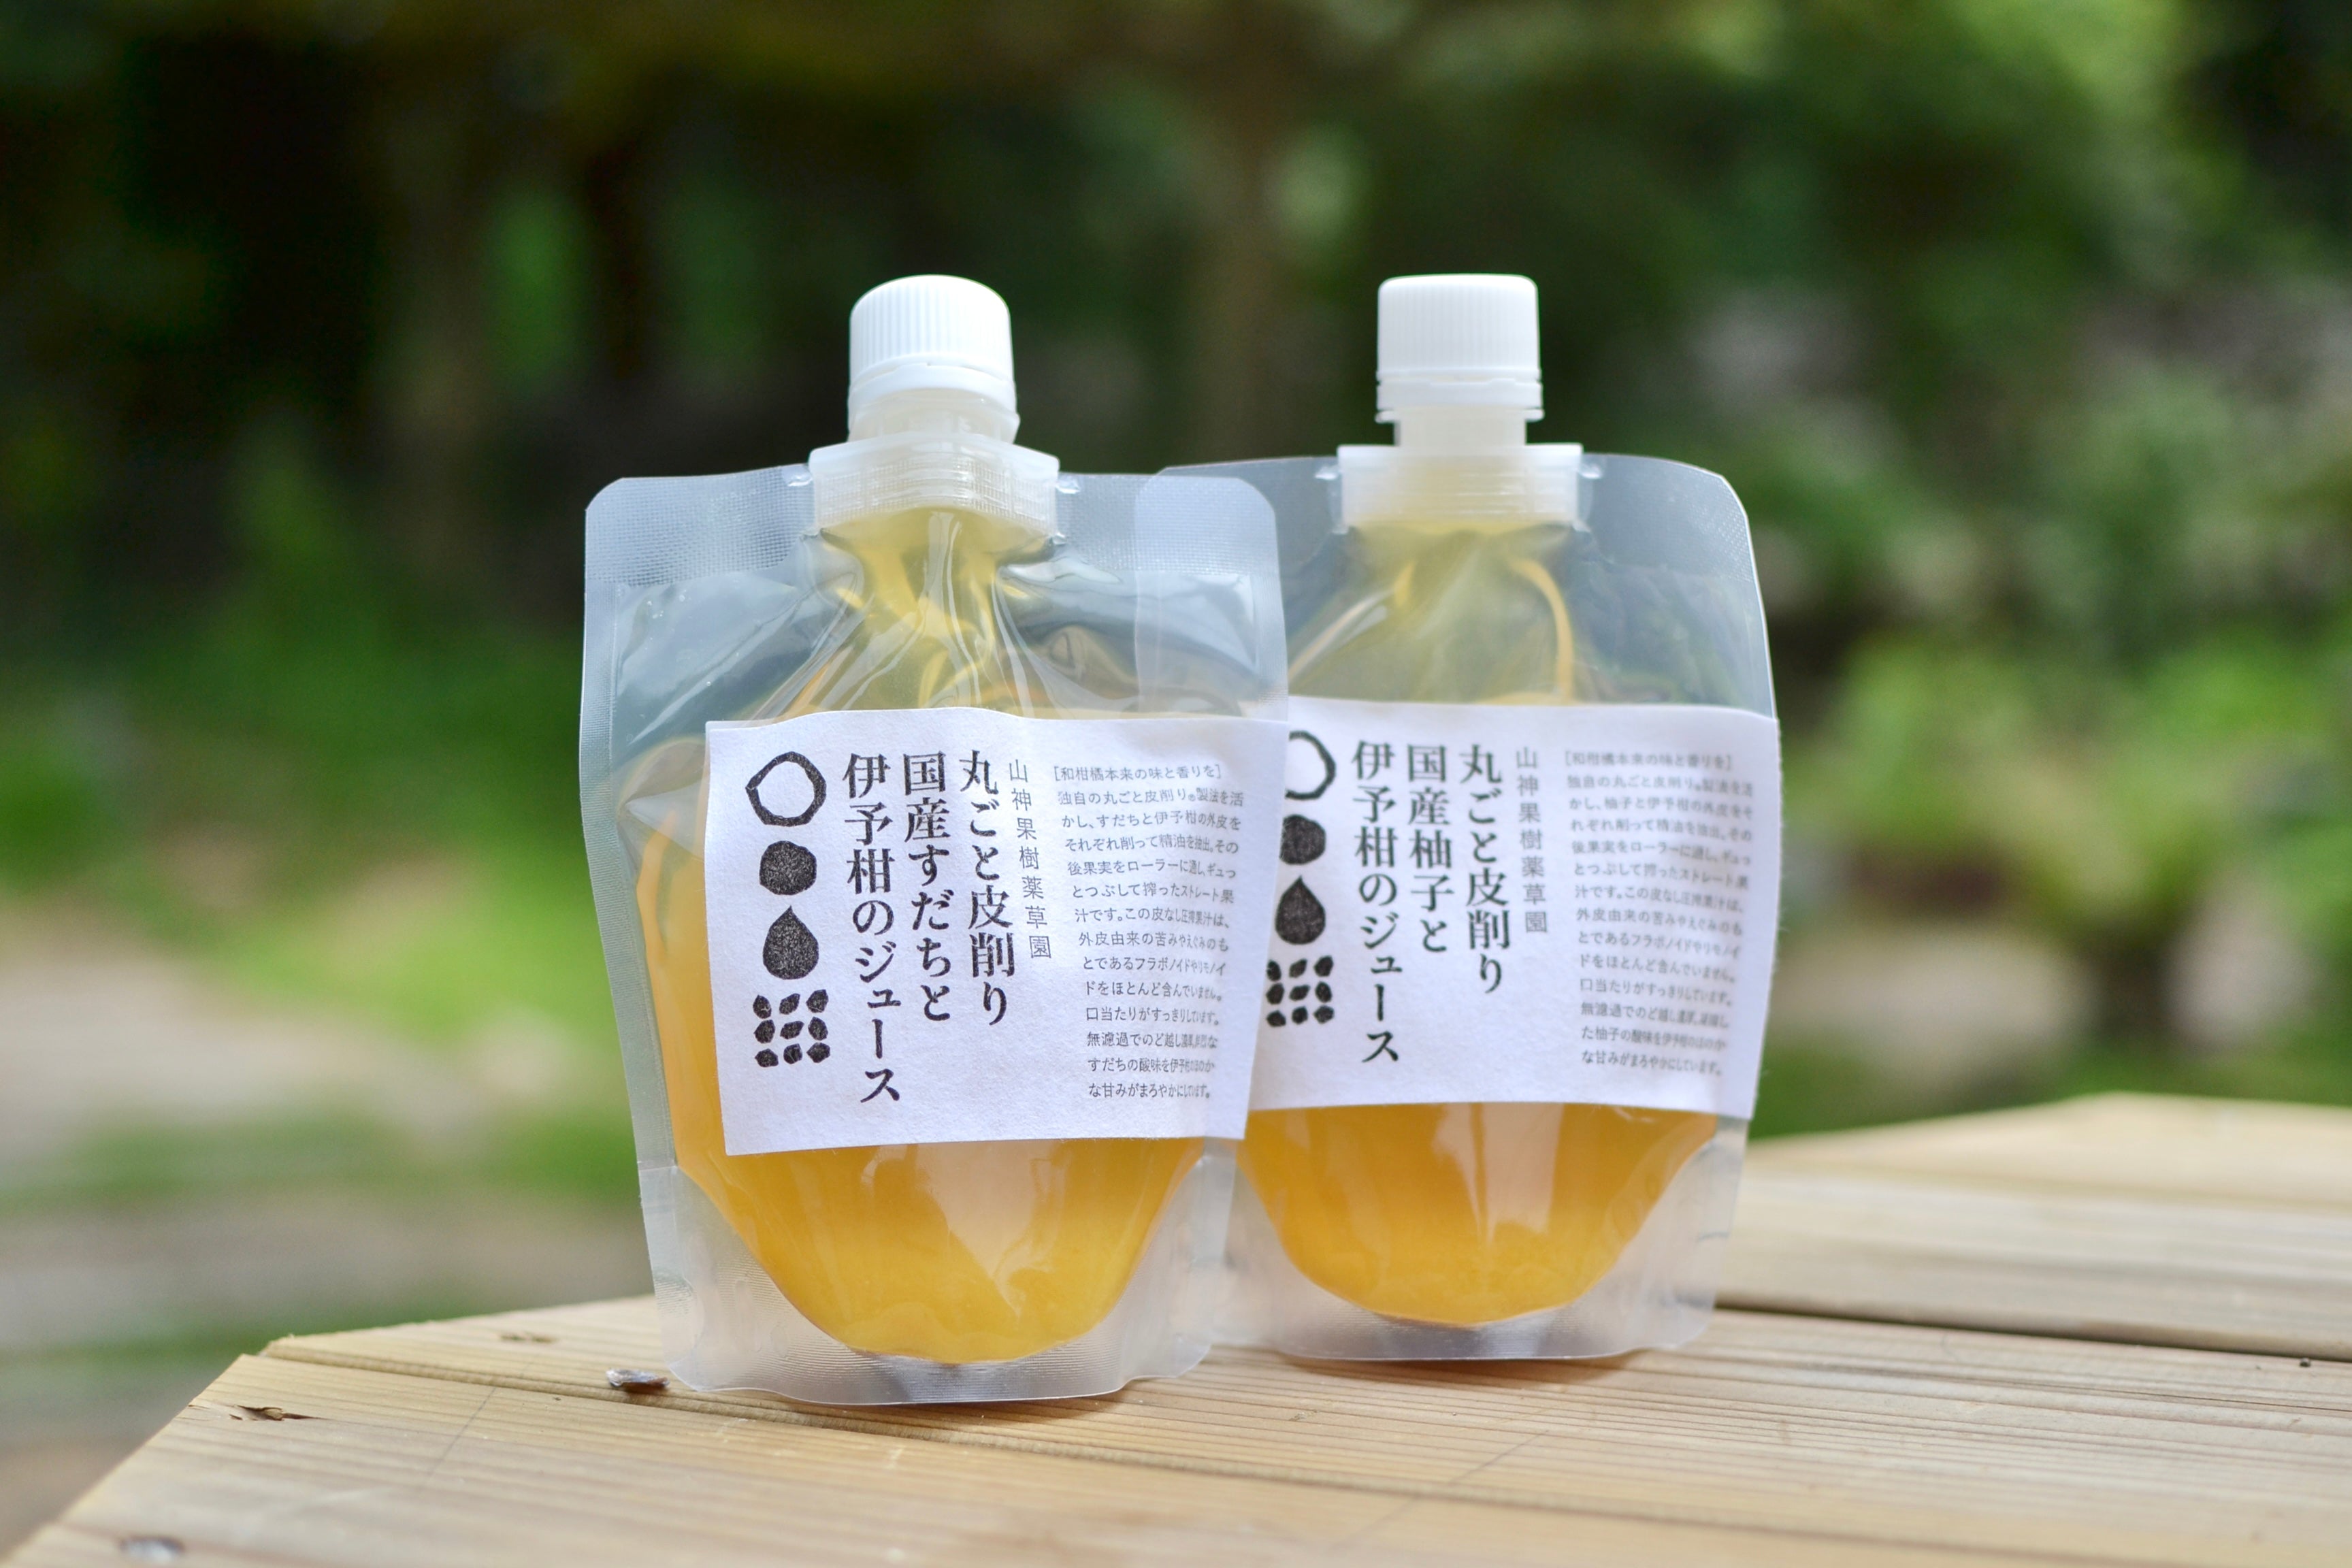 ❤︎丸ごと皮削りすだちと伊予柑のジュース 200ml MARKS&amp;WEB 松山油脂の山神果樹薬草園